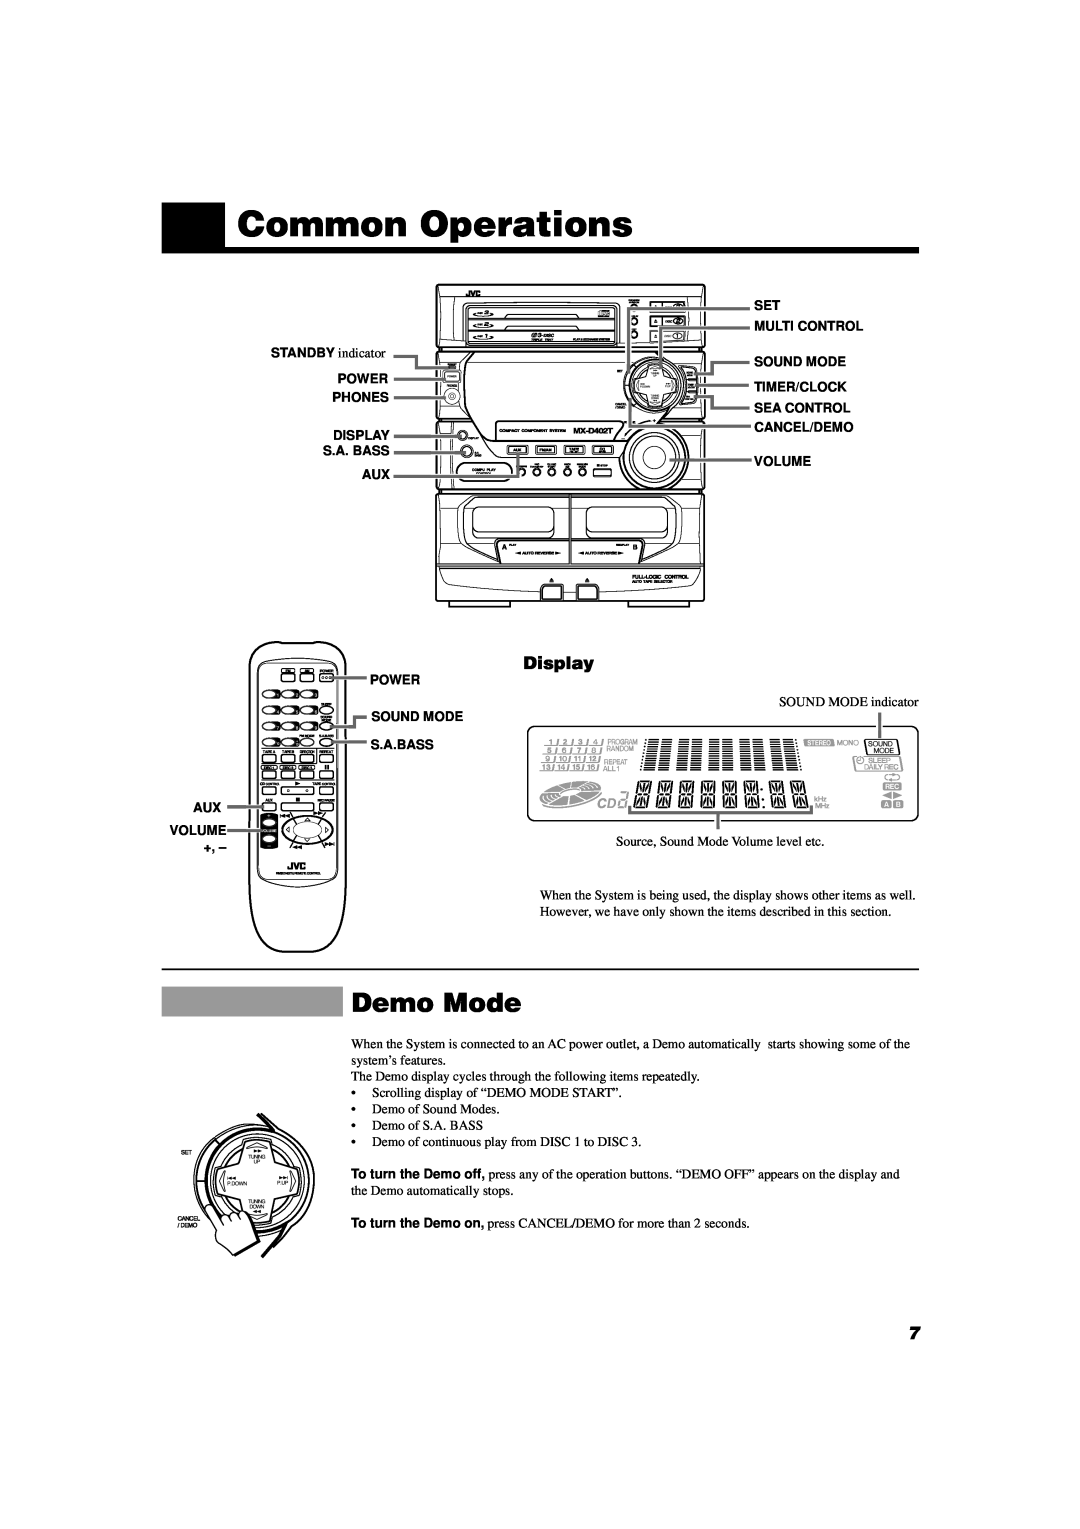 JVC MX-D402T Common Operations, Demo Mode, Power Phones Display S.A. Bass Aux, Multi Control, Sound Mode, Aux Volume + 